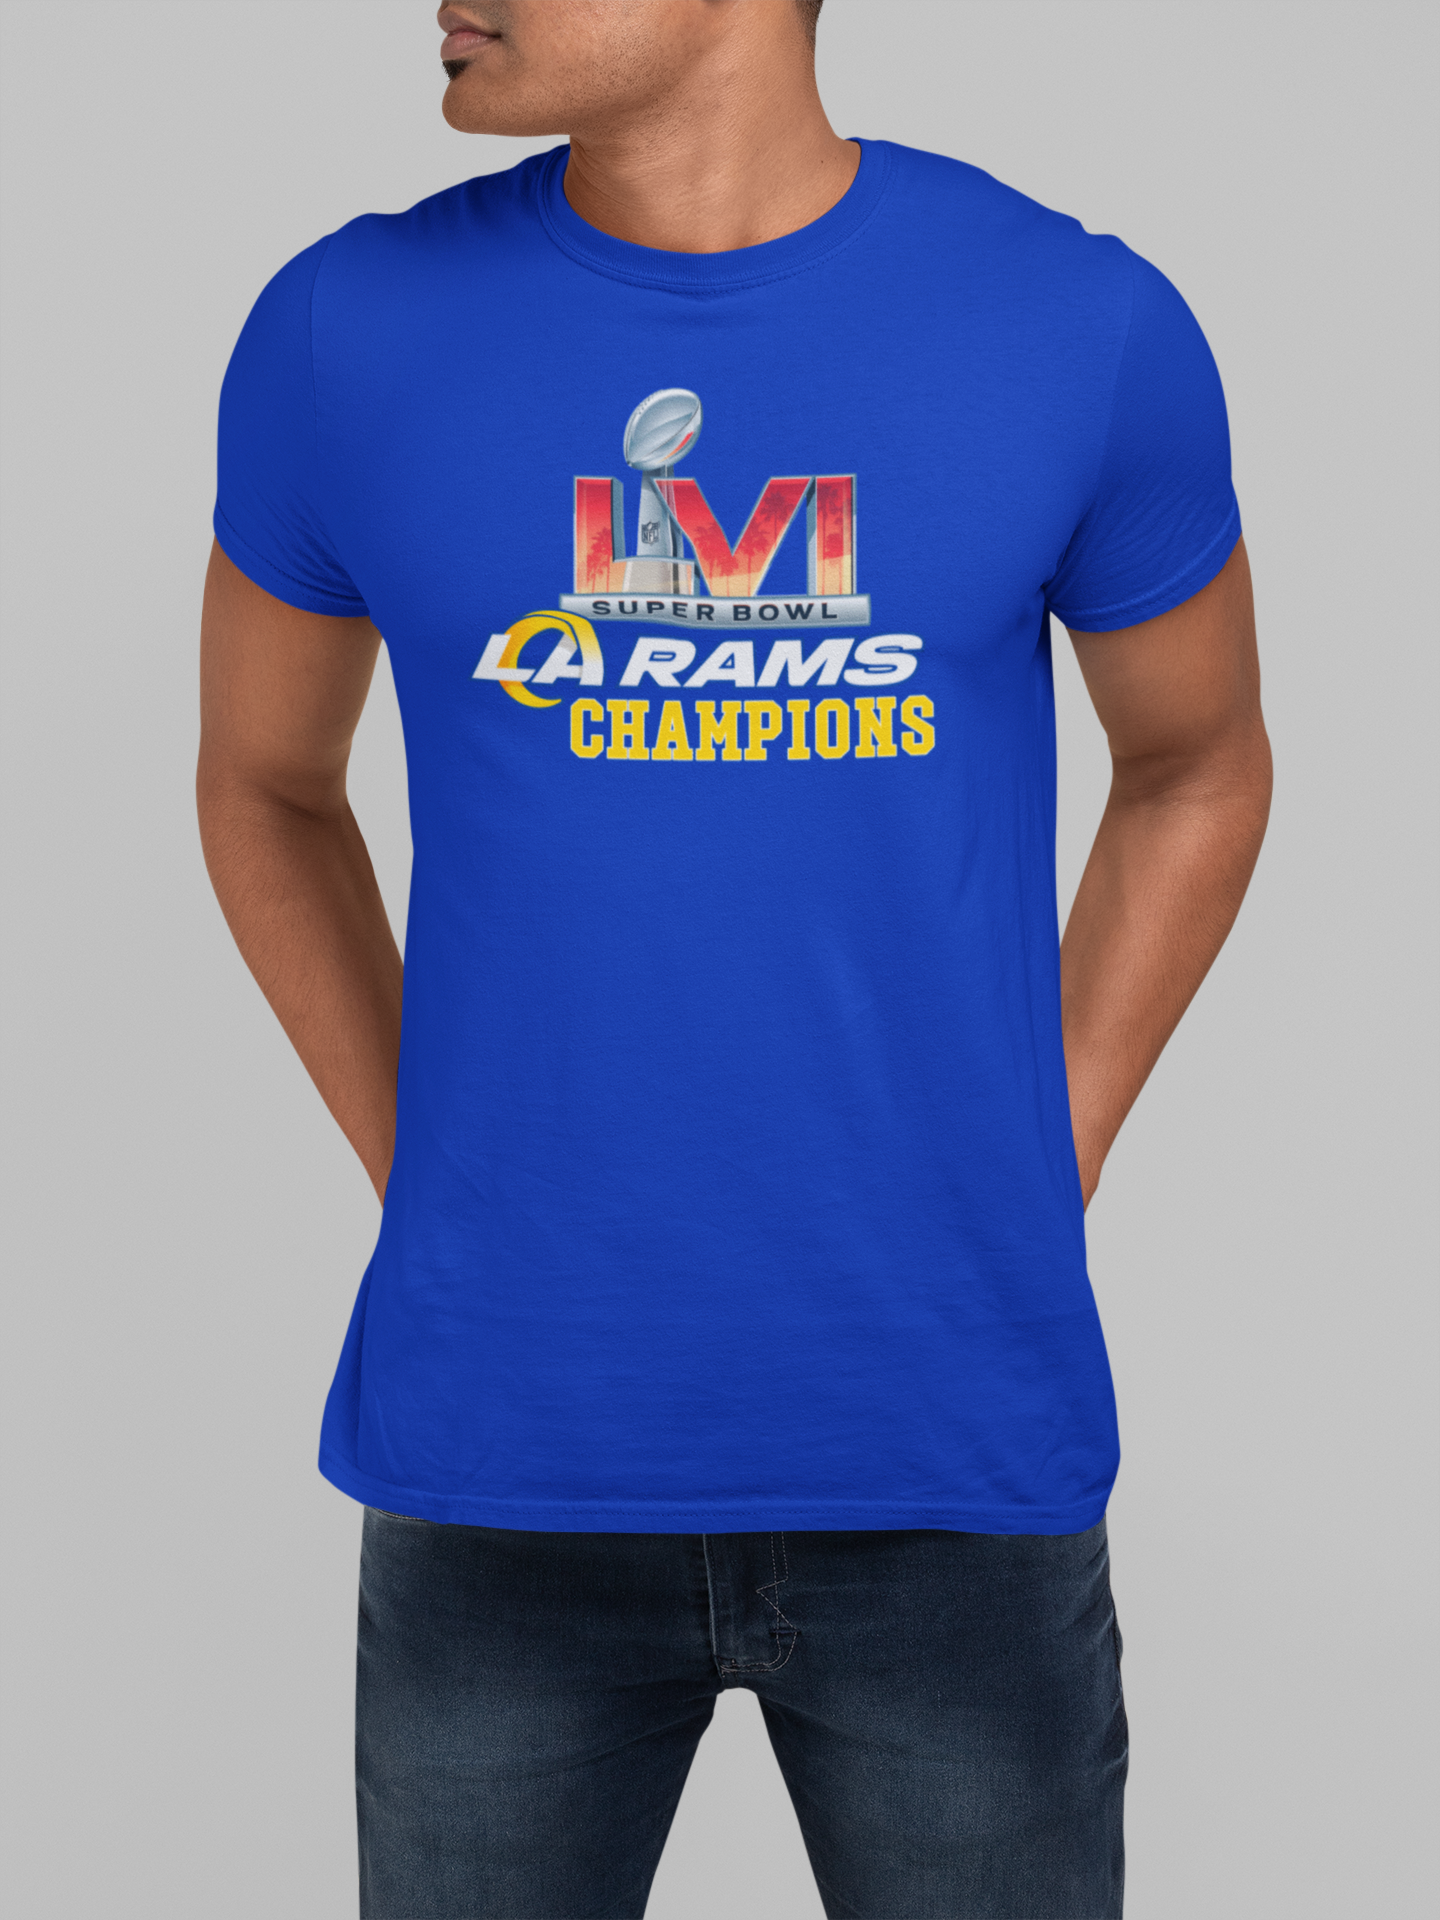 Premium LA Rams Super Bowl Team Champions LVI Art Shirt - Hersmiles